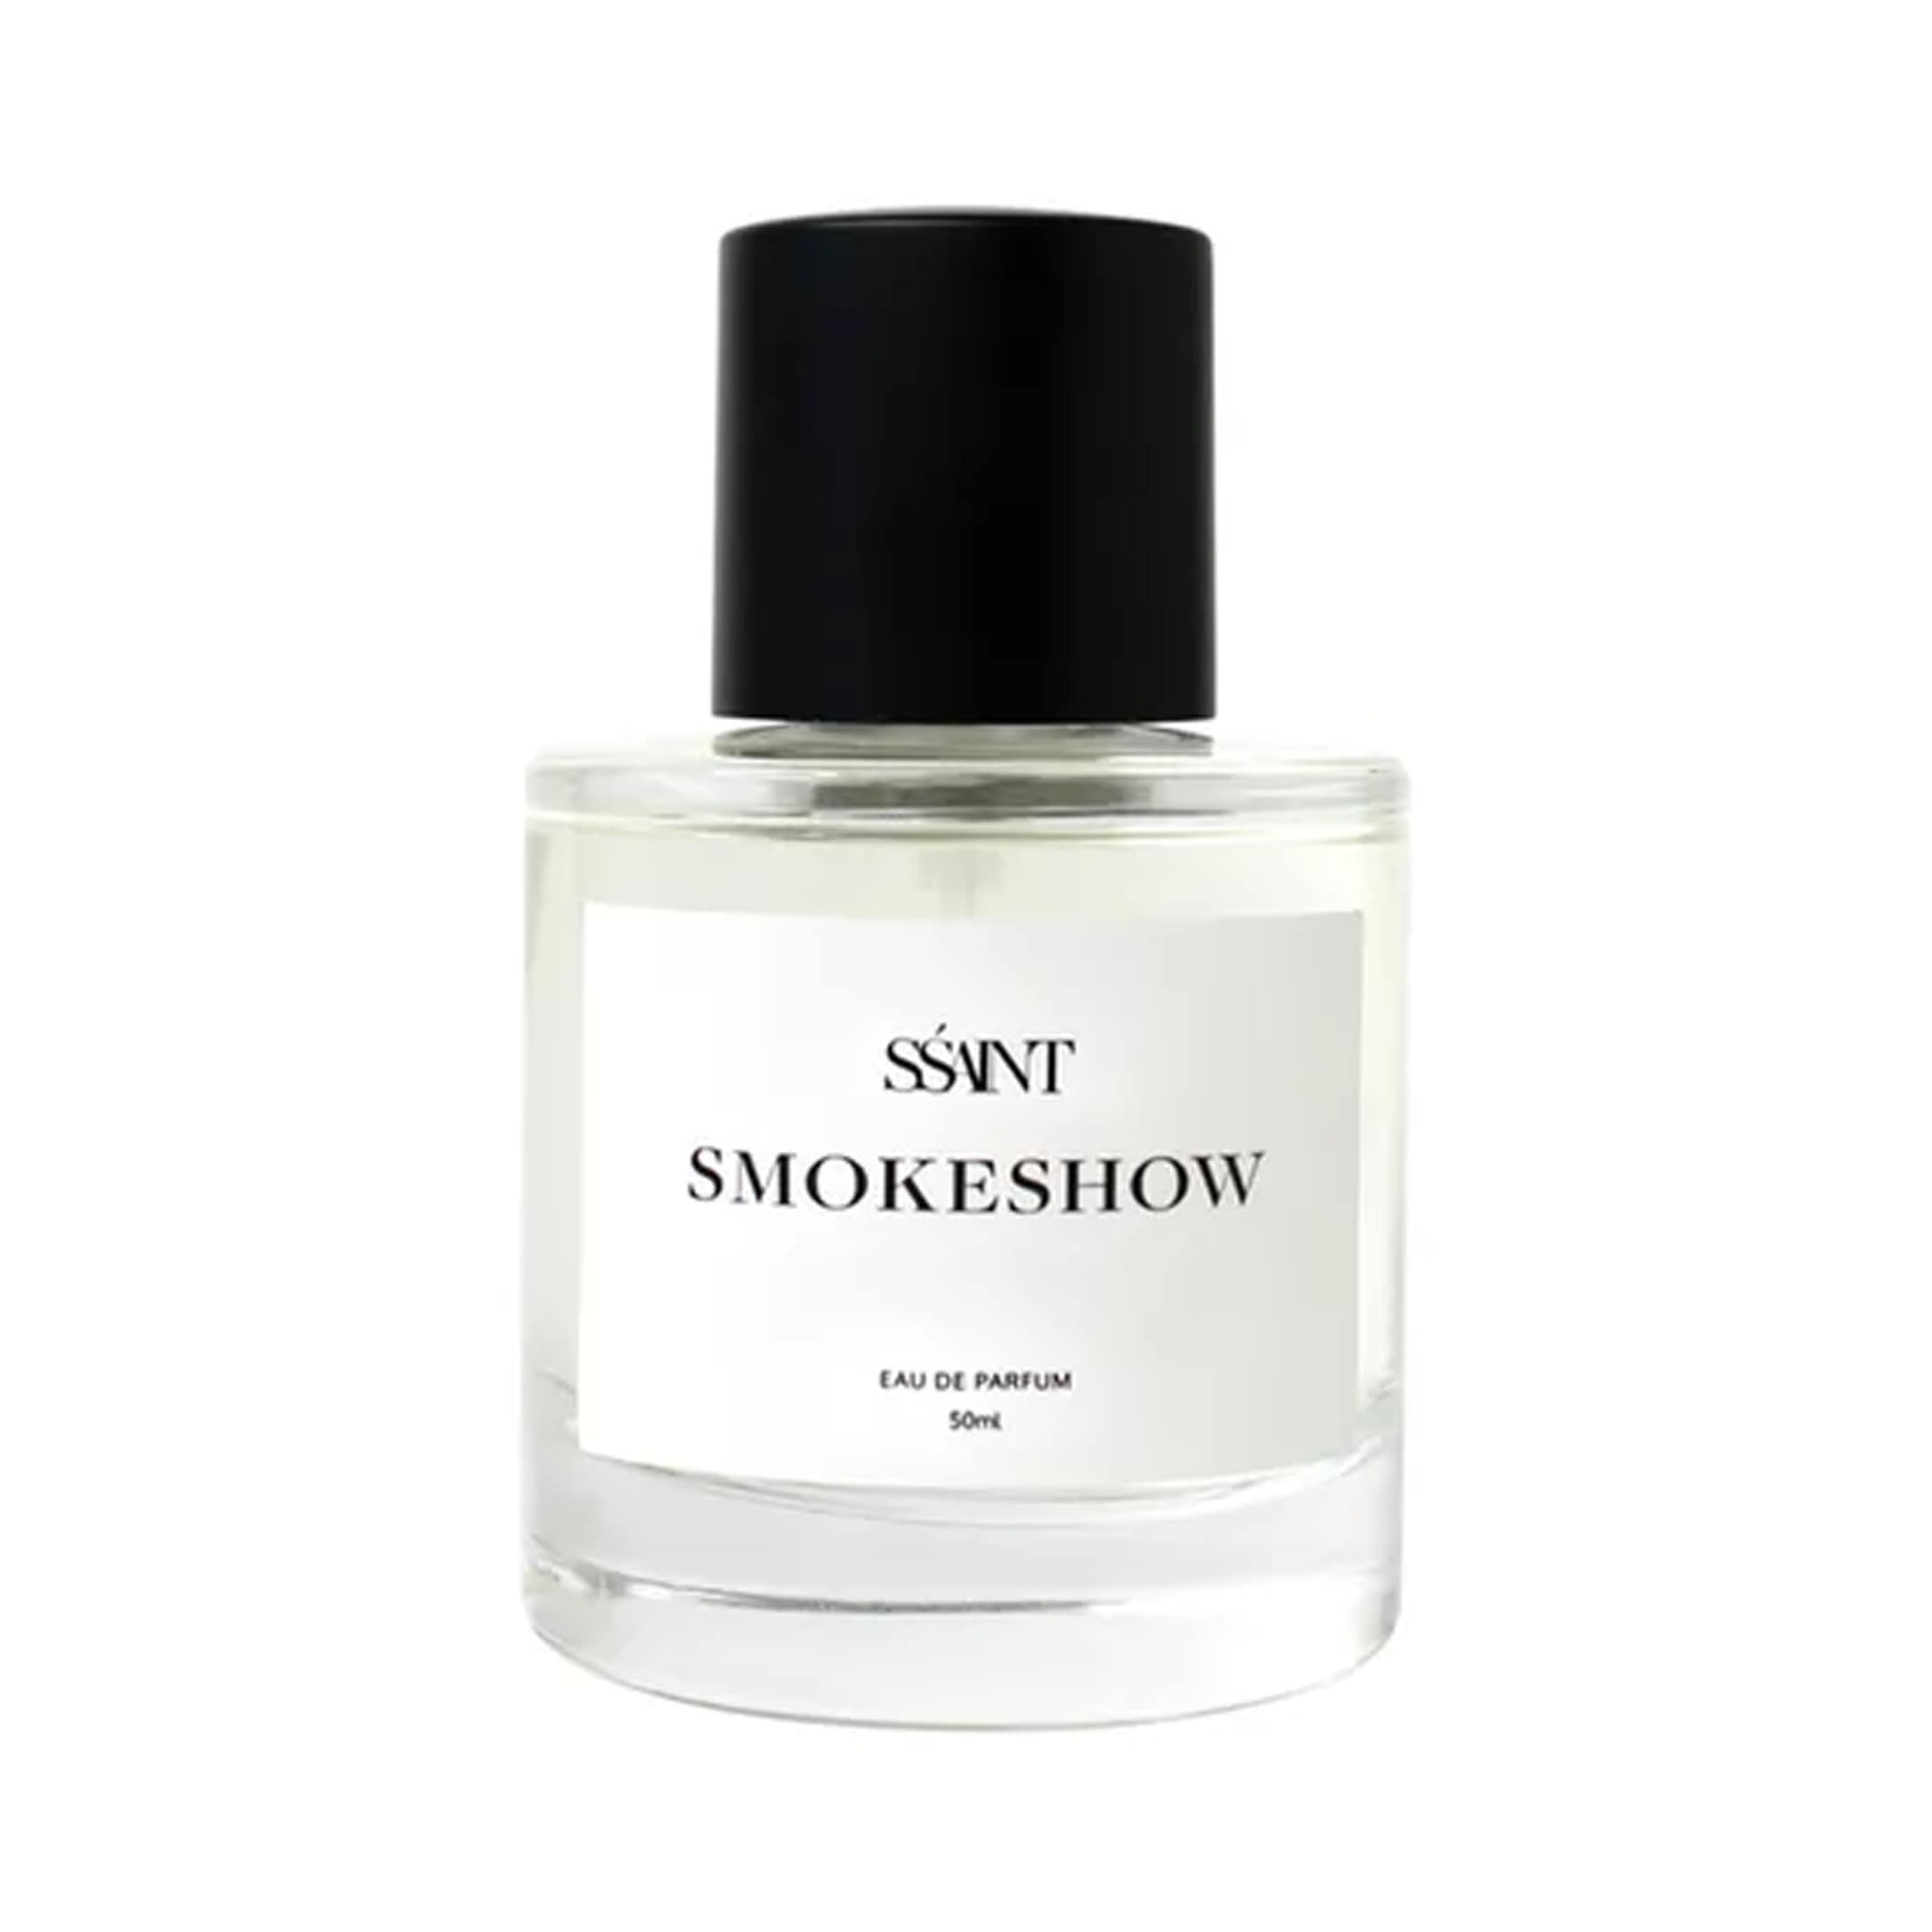 SŚAINT Parfum Smokeshow 50ml